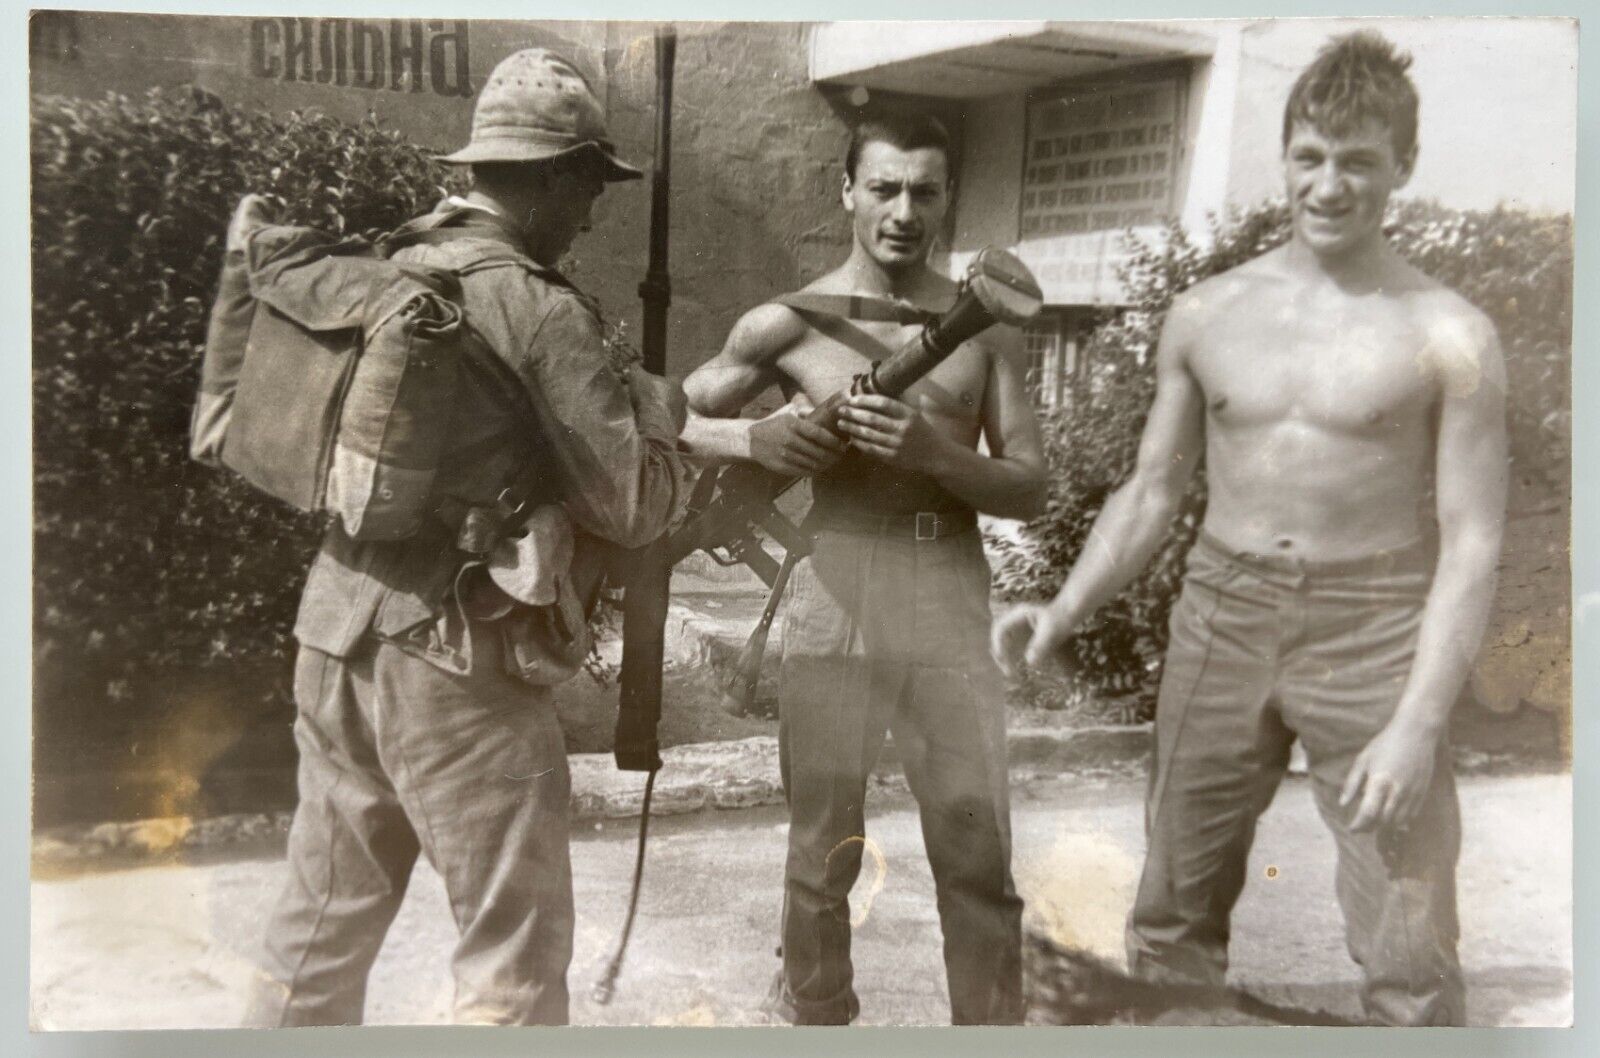 Shirtless Men Soldiers Beefcake Affectionate Guys Gay Interest Vintage Photo